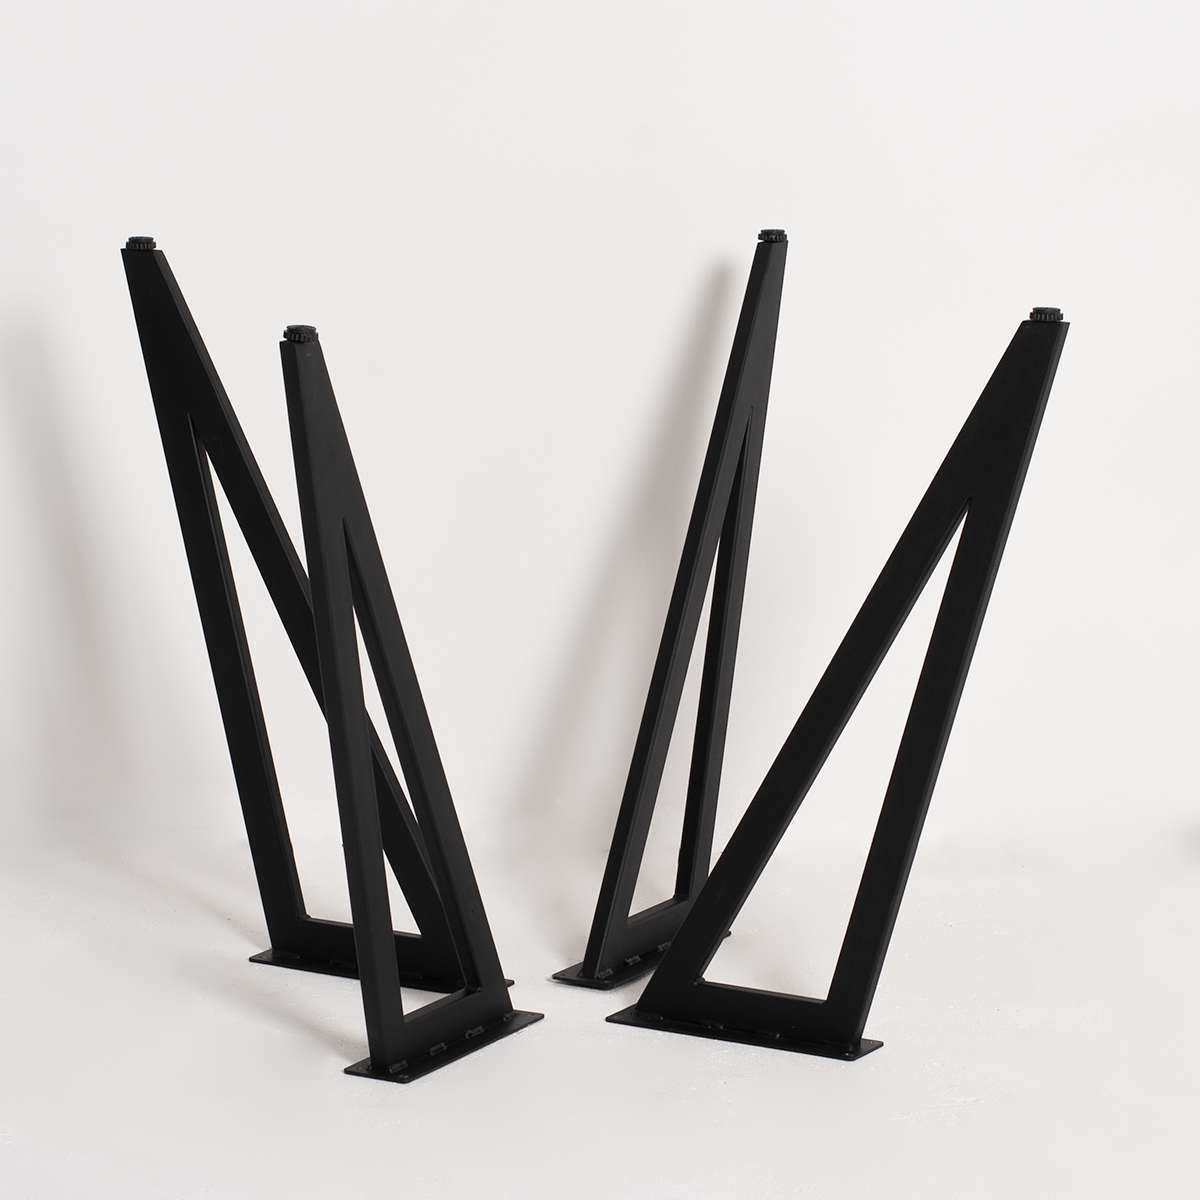 Dreieck Tischgestell Metall schwarz – Set aus 4 Füßen